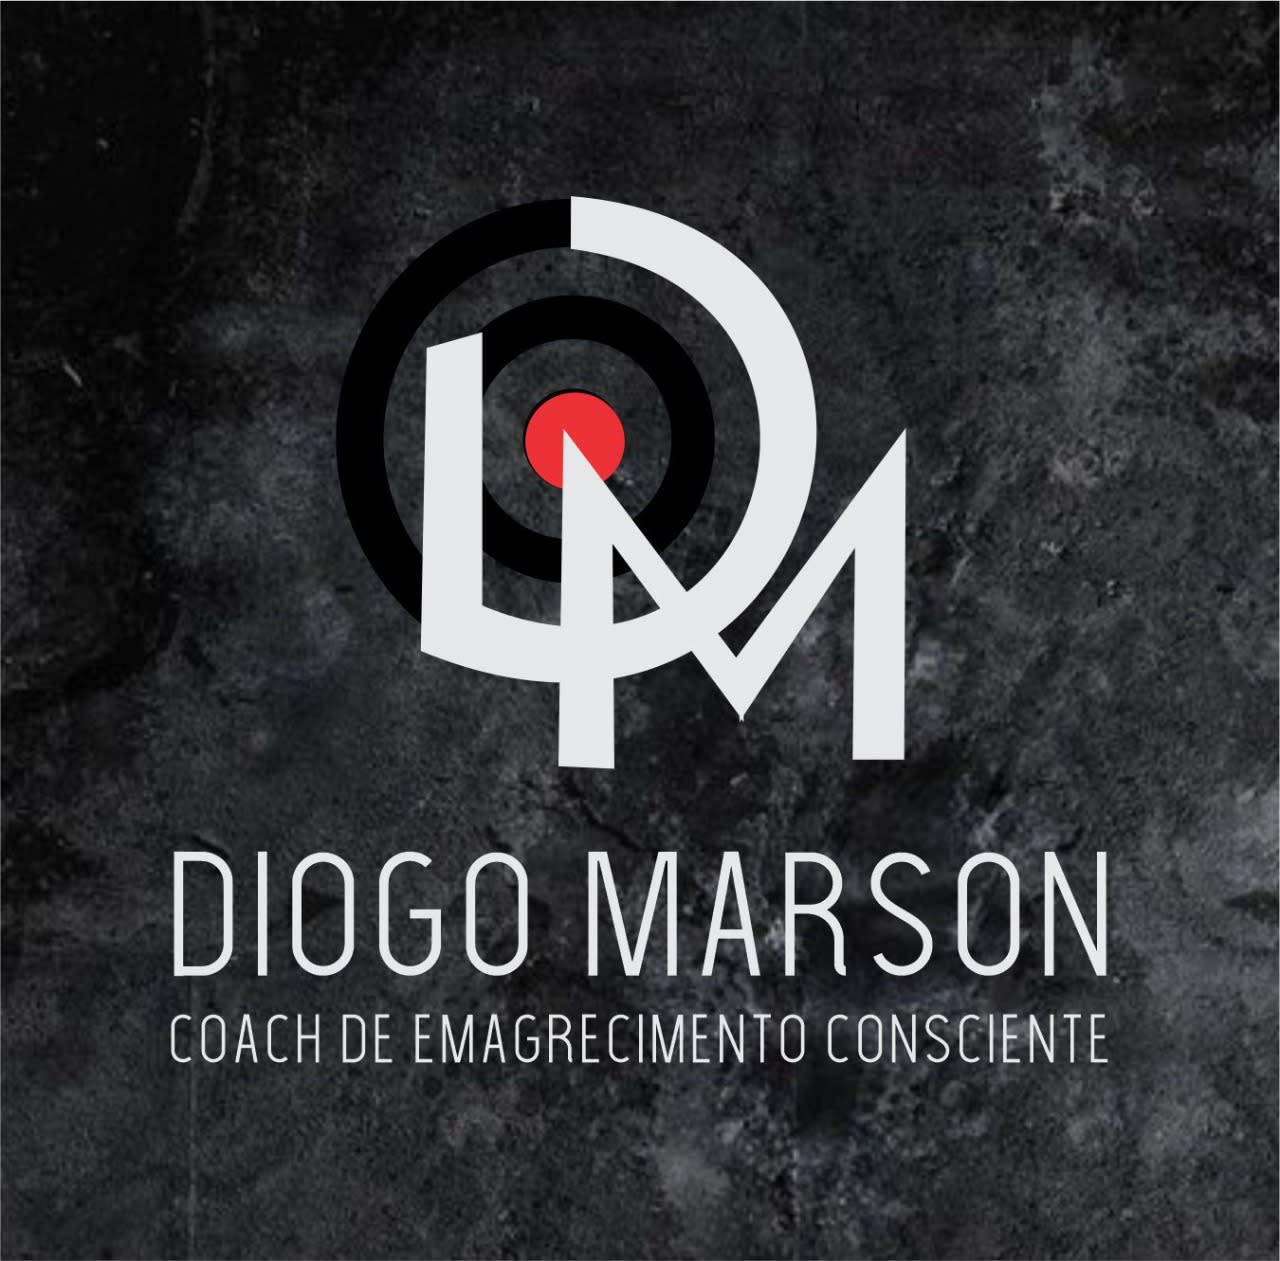 Diogo Marson Coach de Emagrecimento Consciente